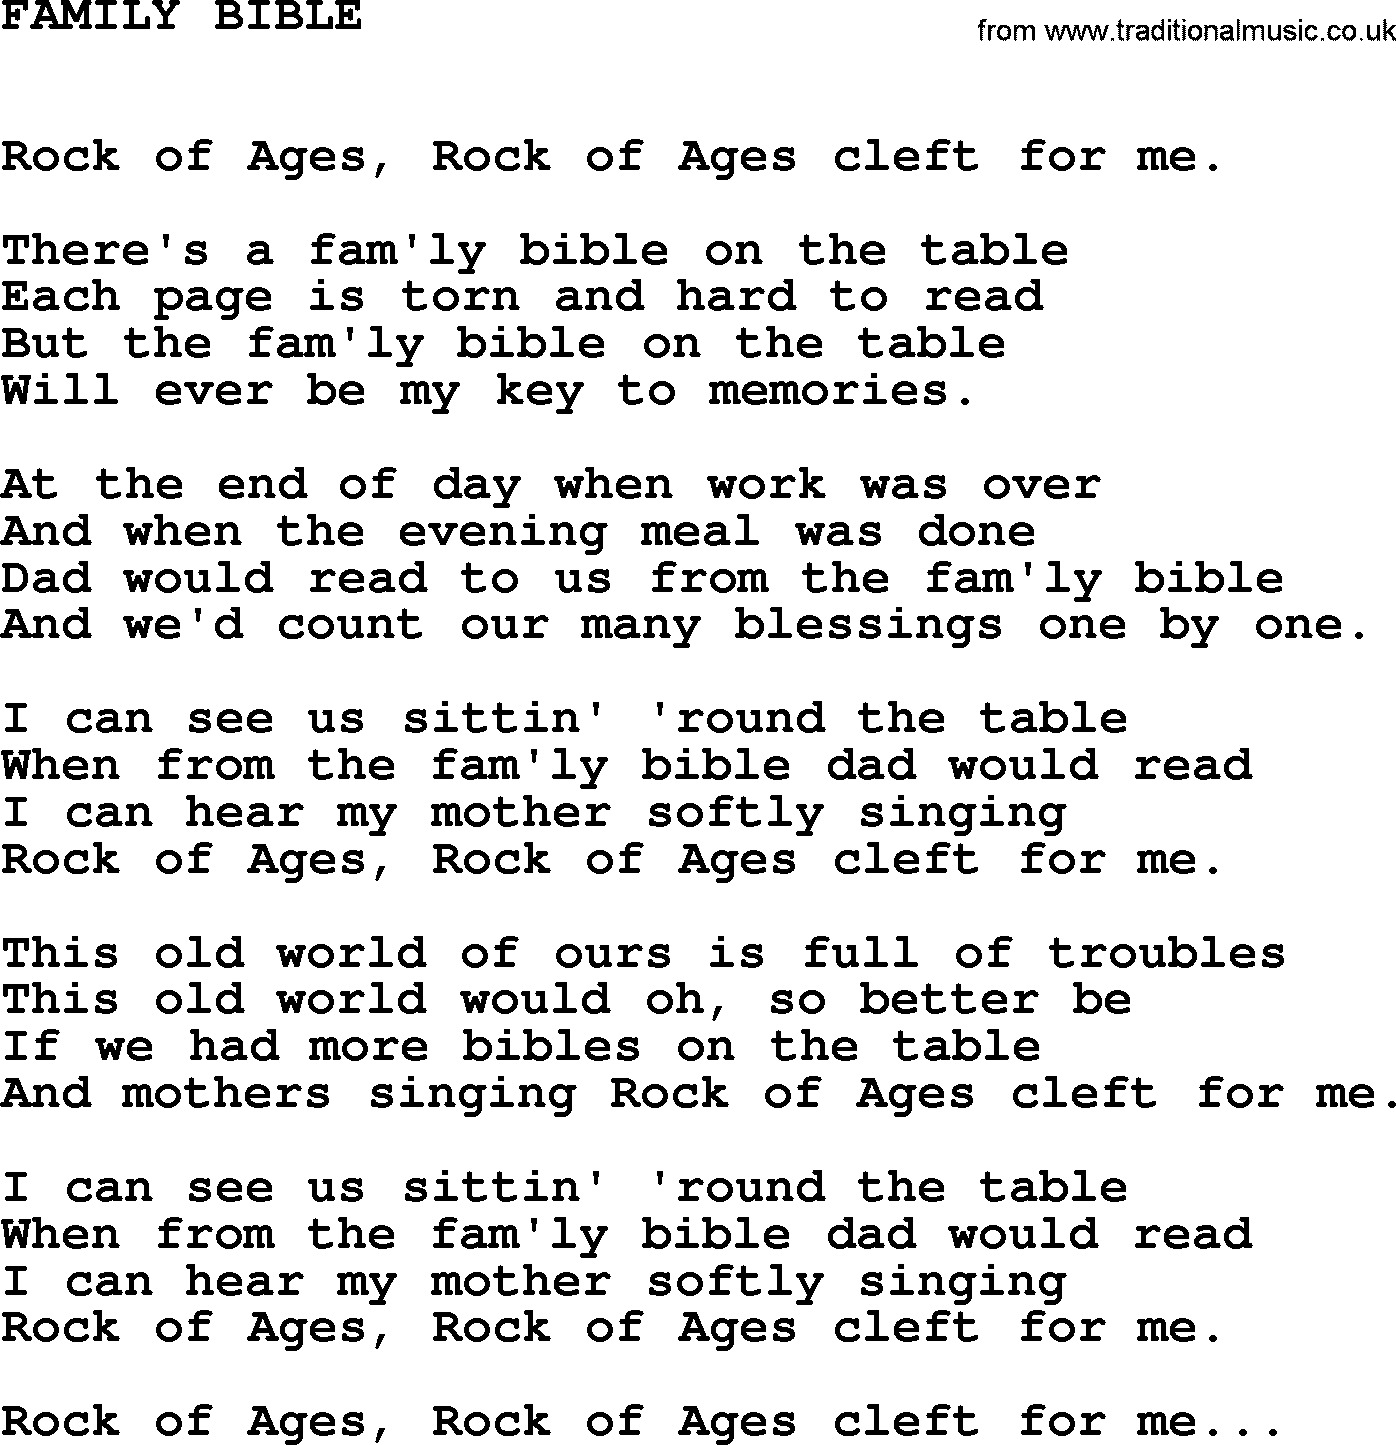 Johnny Cash song Family Bible.txt lyrics